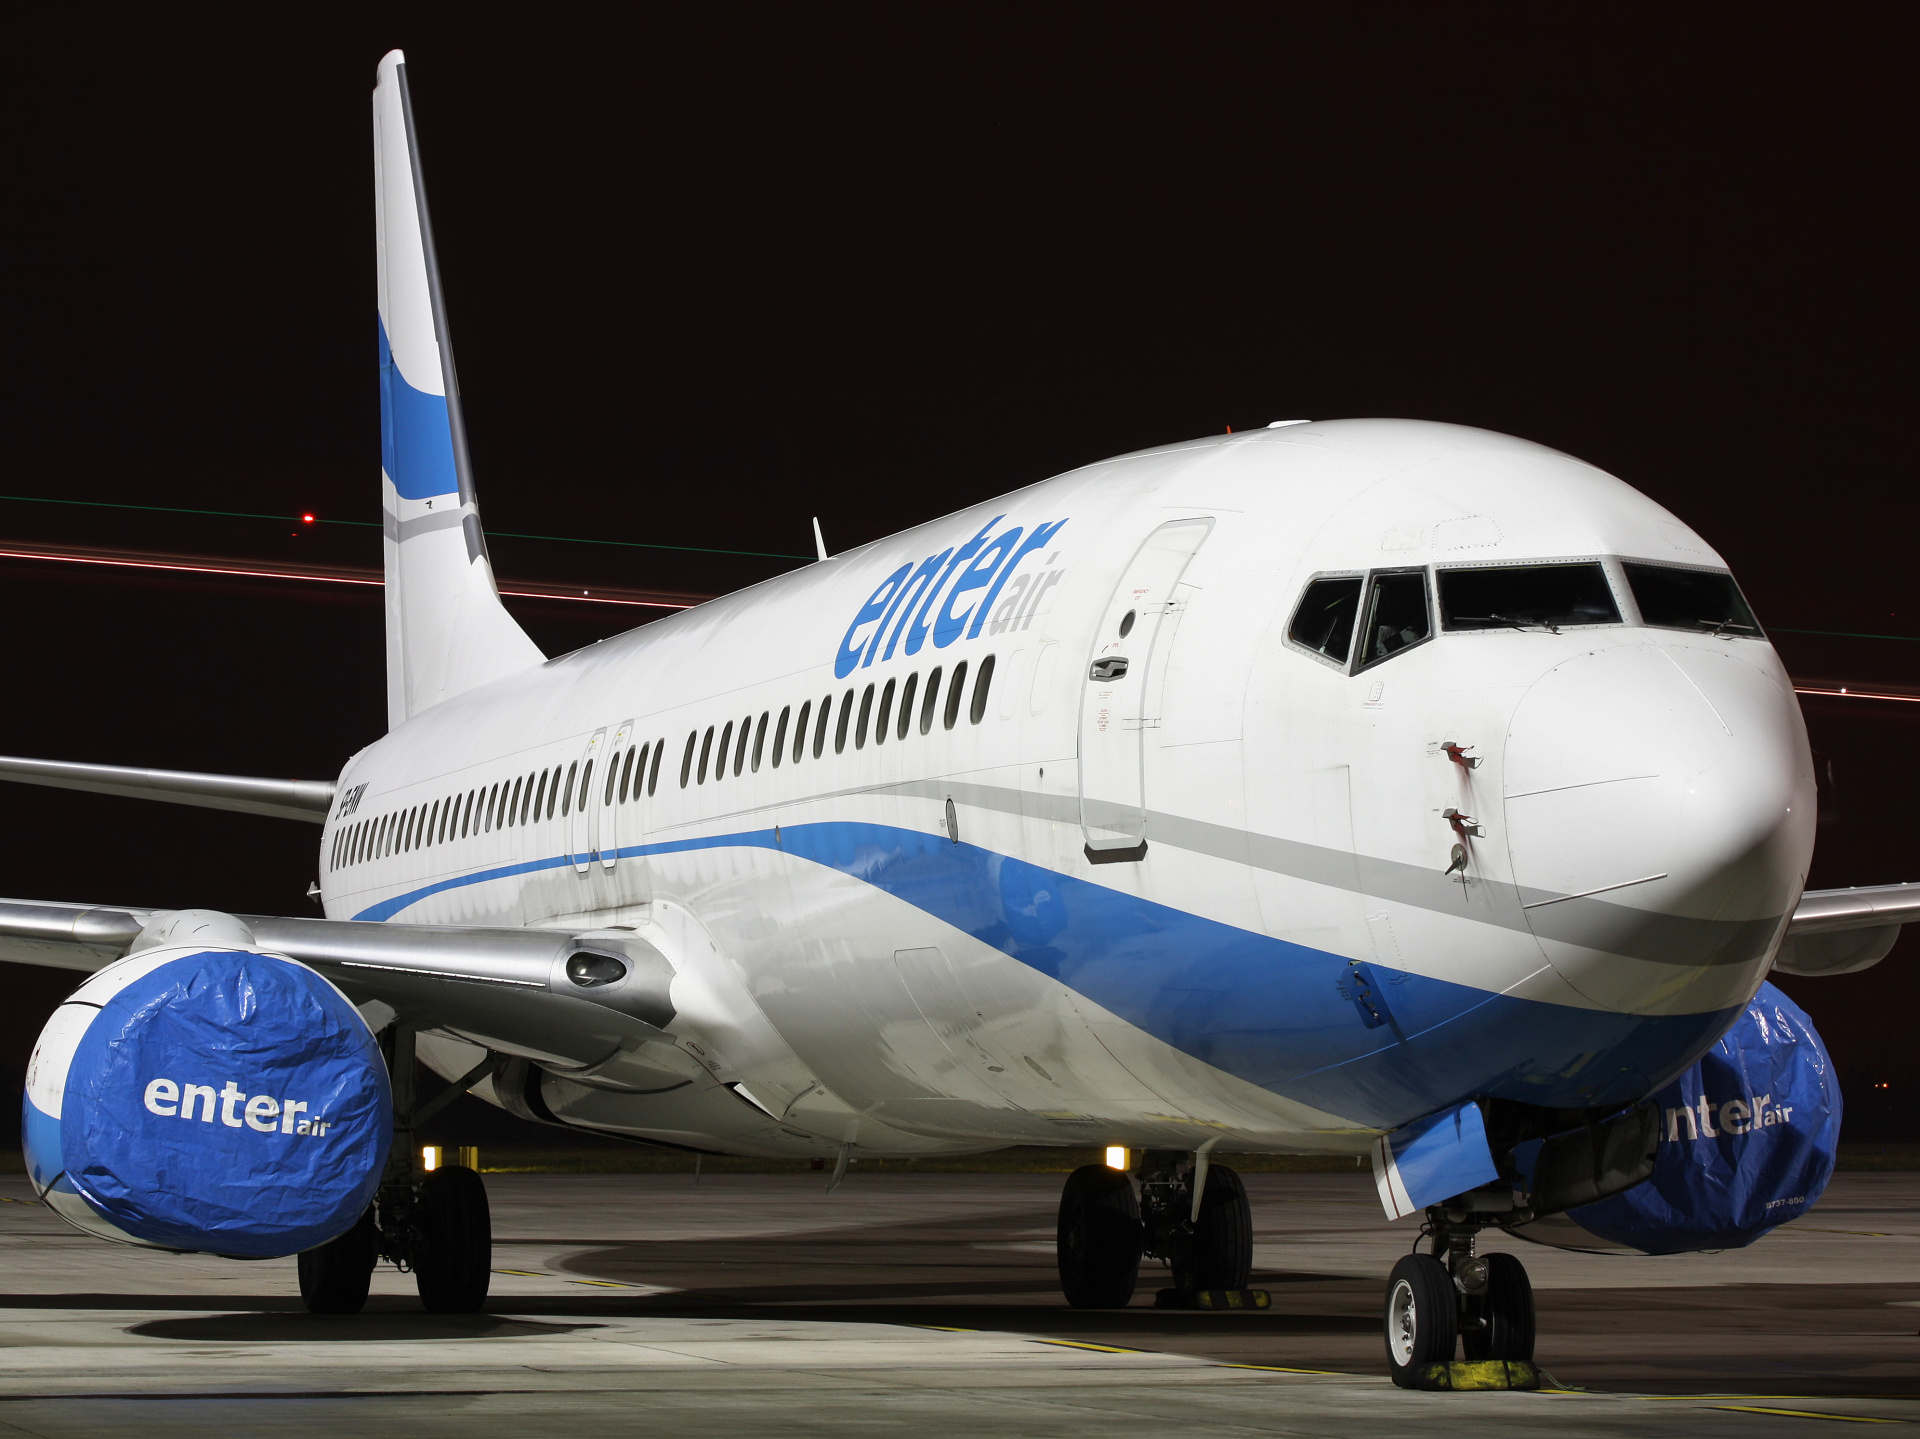 SP-ENW (Aircraft » EPWA Spotting » Boeing 737-800 » Enter Air)